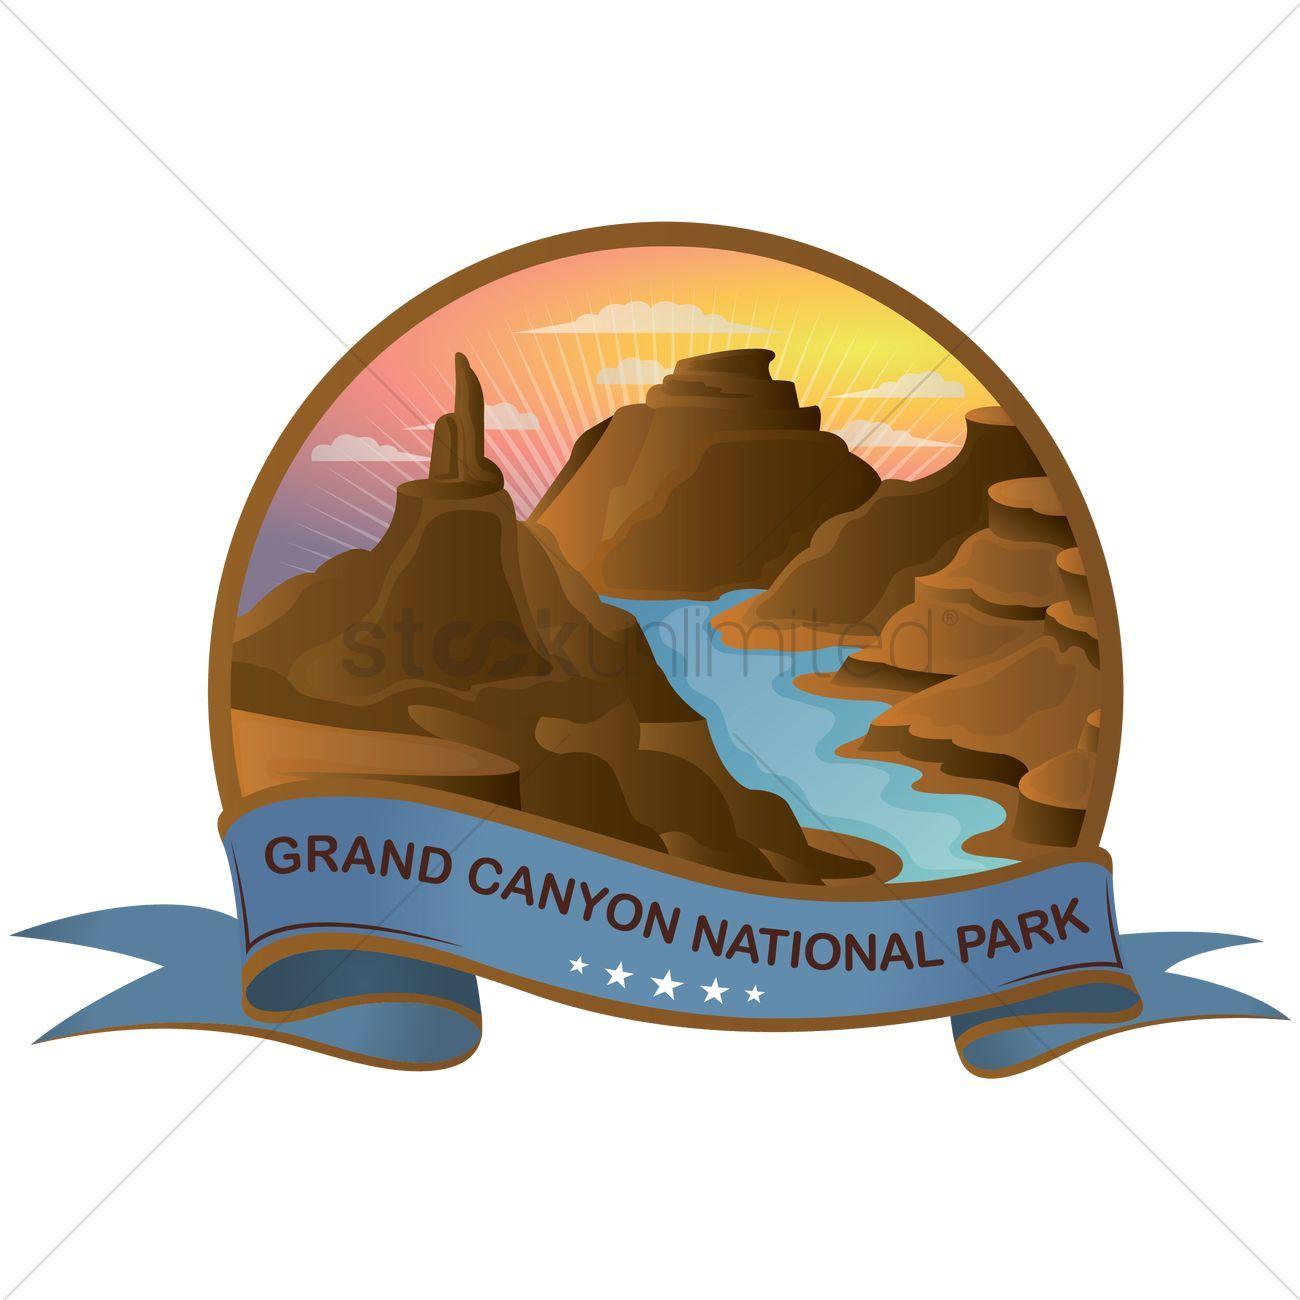 Grand Canyon National Park Logo - Grand canyon national park Vector Image - 1569057 | StockUnlimited